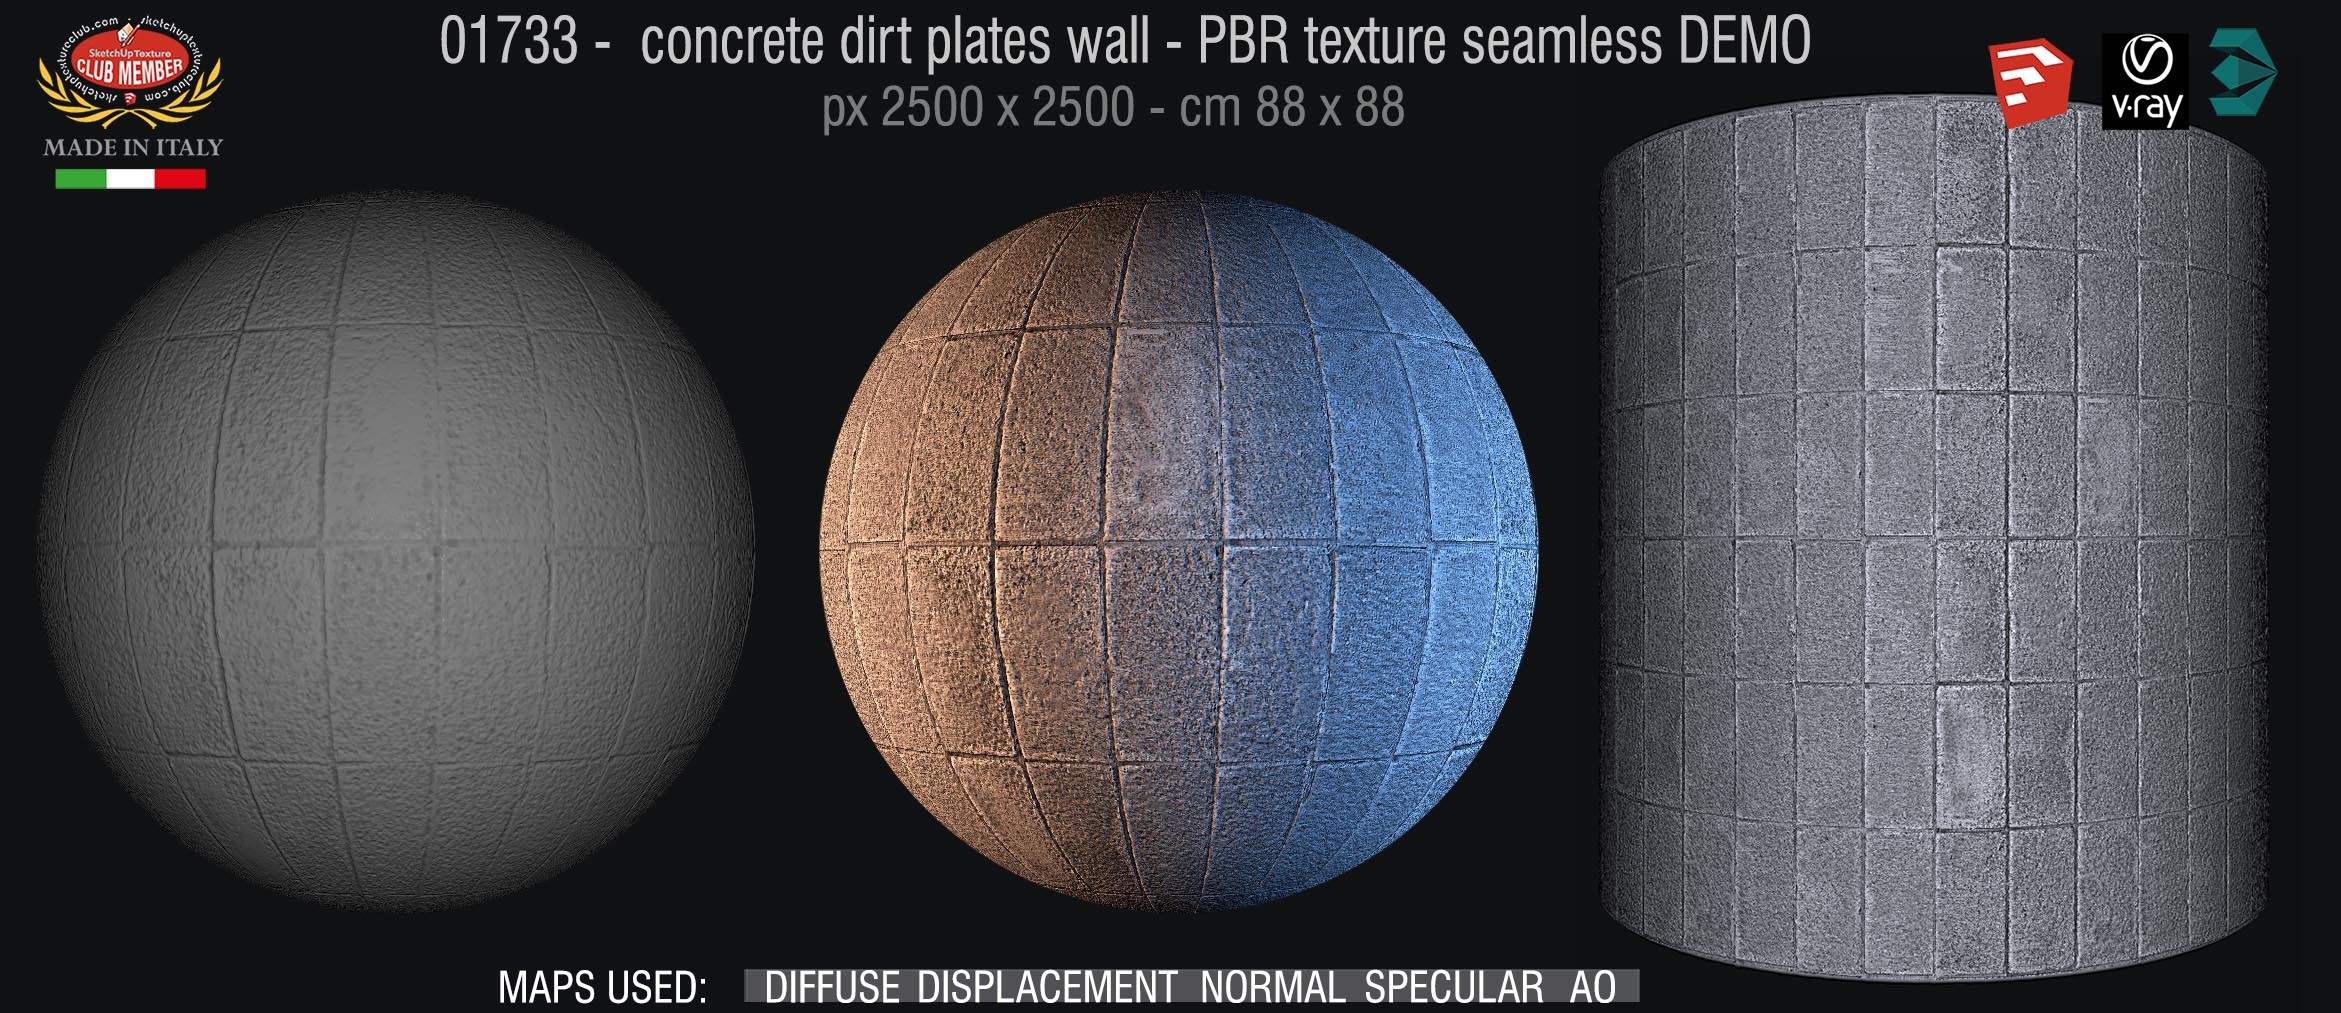 01733 concrete dirt plates wall PBR texture seamless DEMO